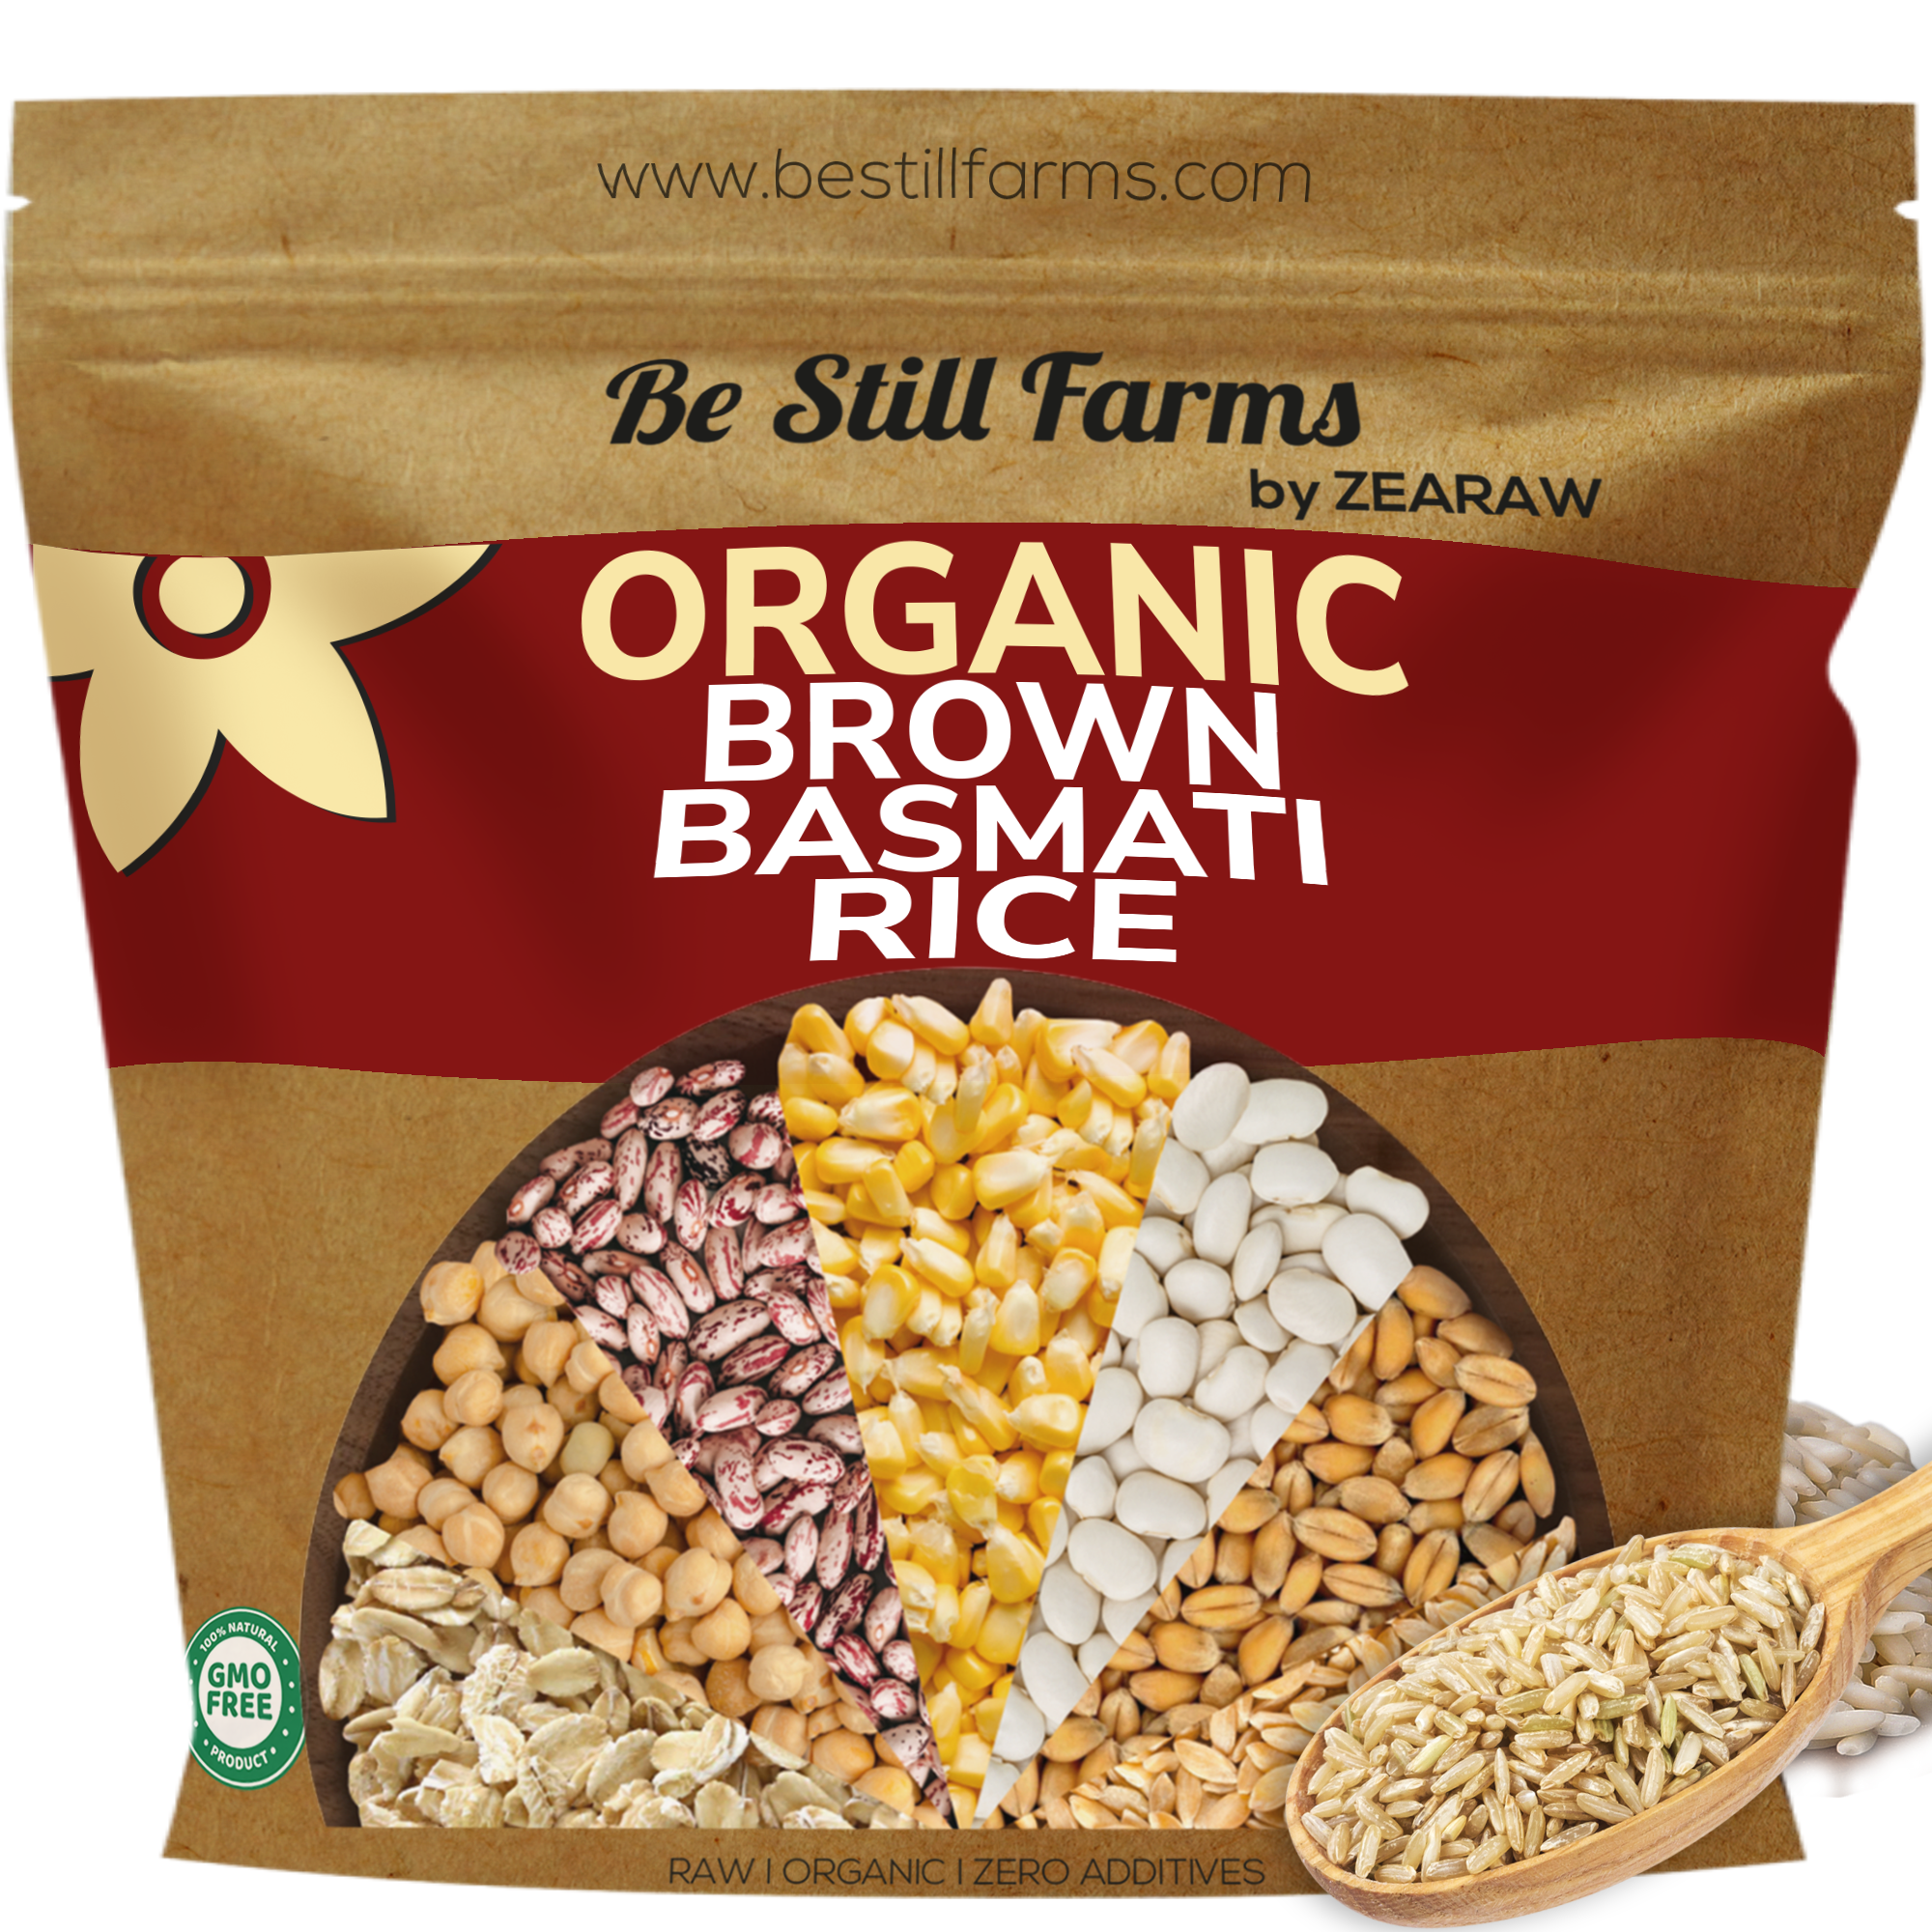 Organic Brown Basmati Rice - Be Still Farms